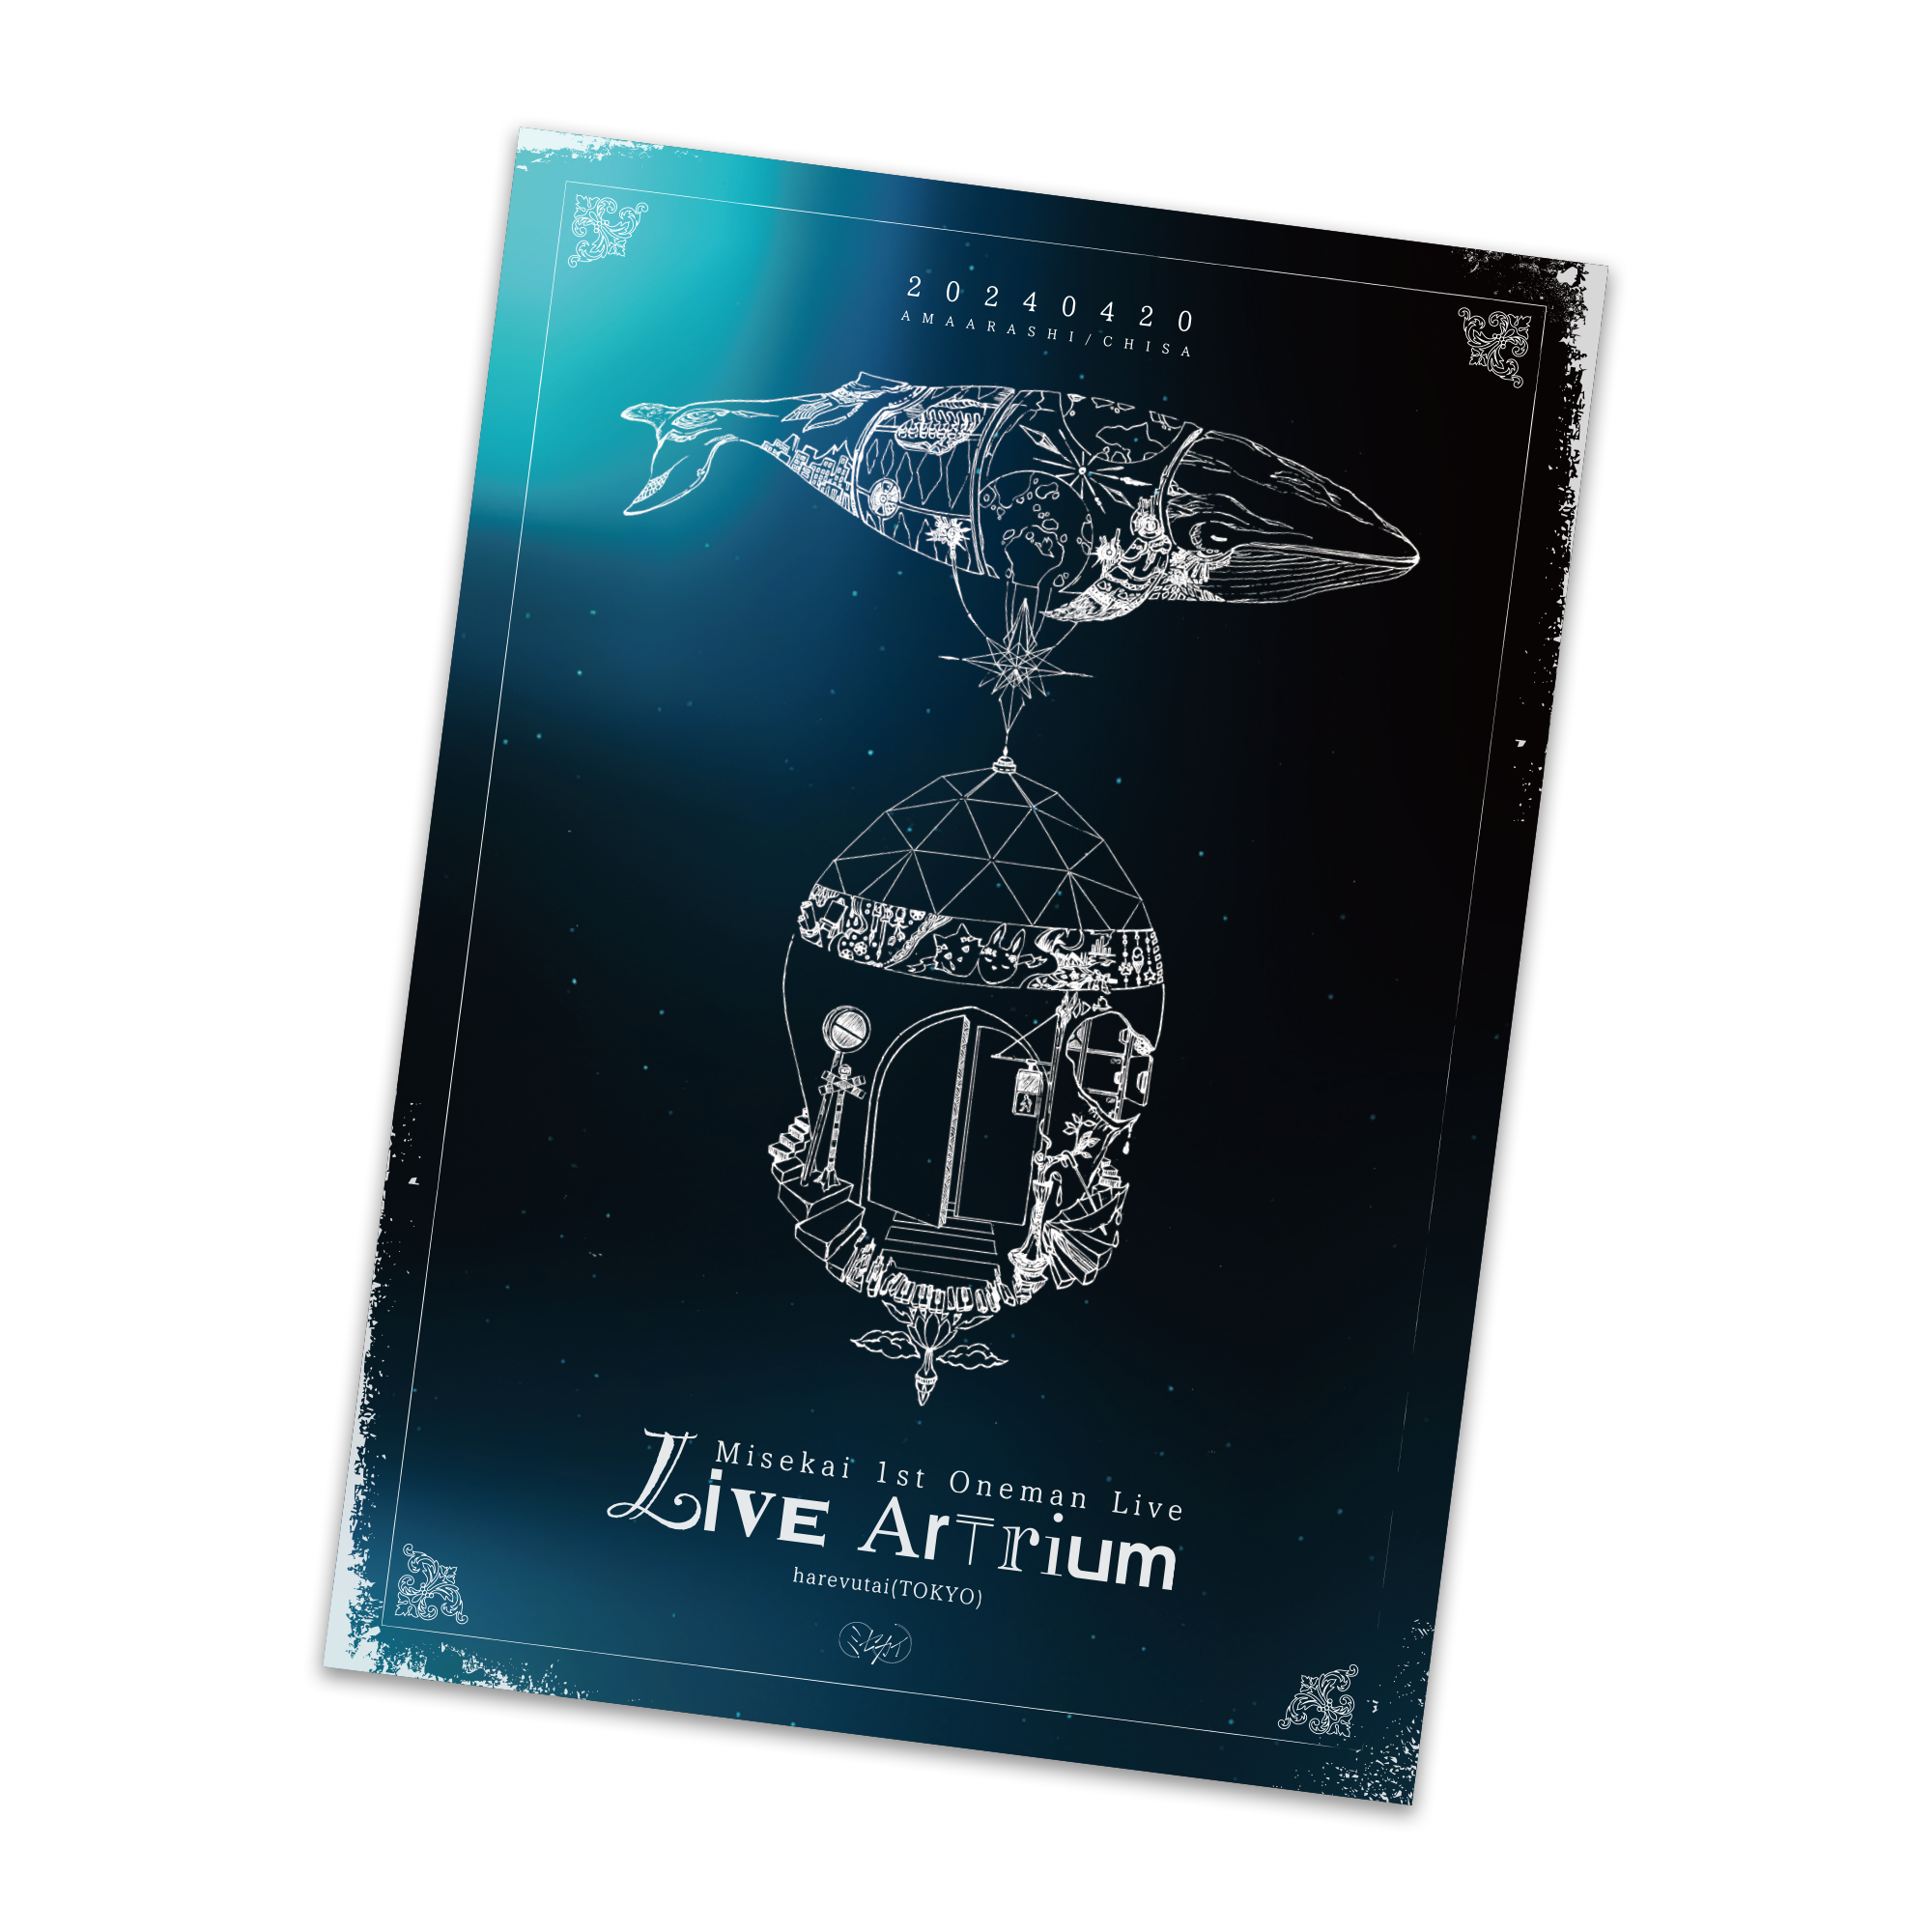 Live Artrium ビジュアルポスター(Misekai 1st Oneman Live - Live Artrium - ) | きゃにめ